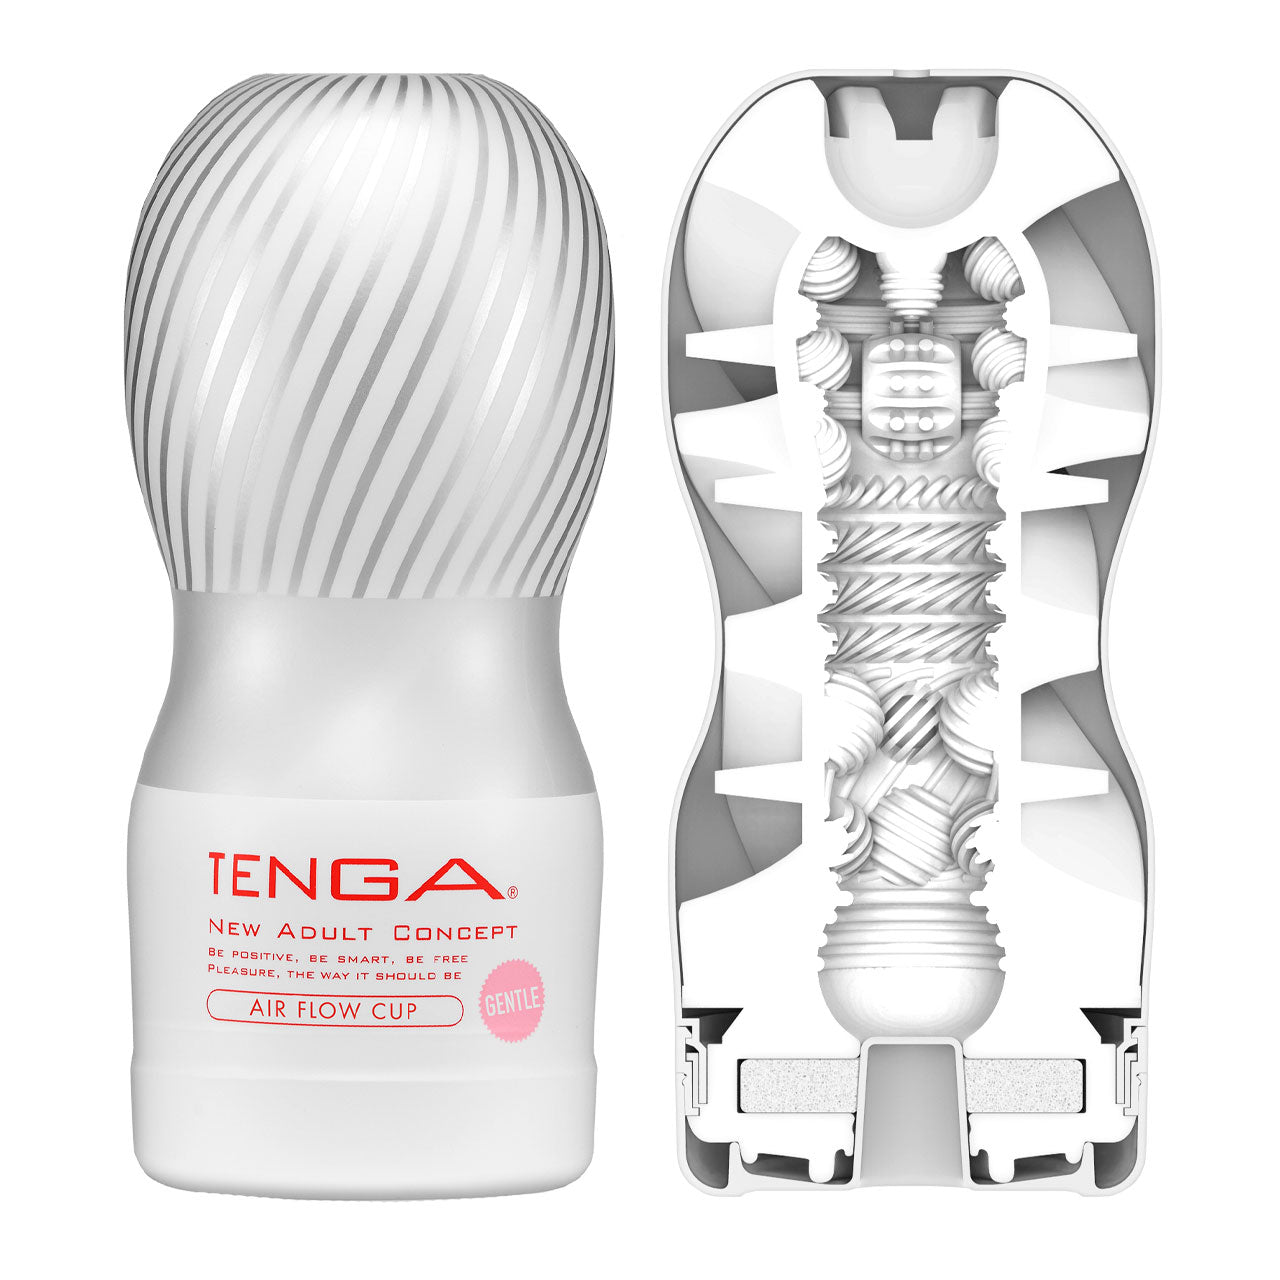 TENGA Air Flow Cup - Gentle - One Stop Adult Shop